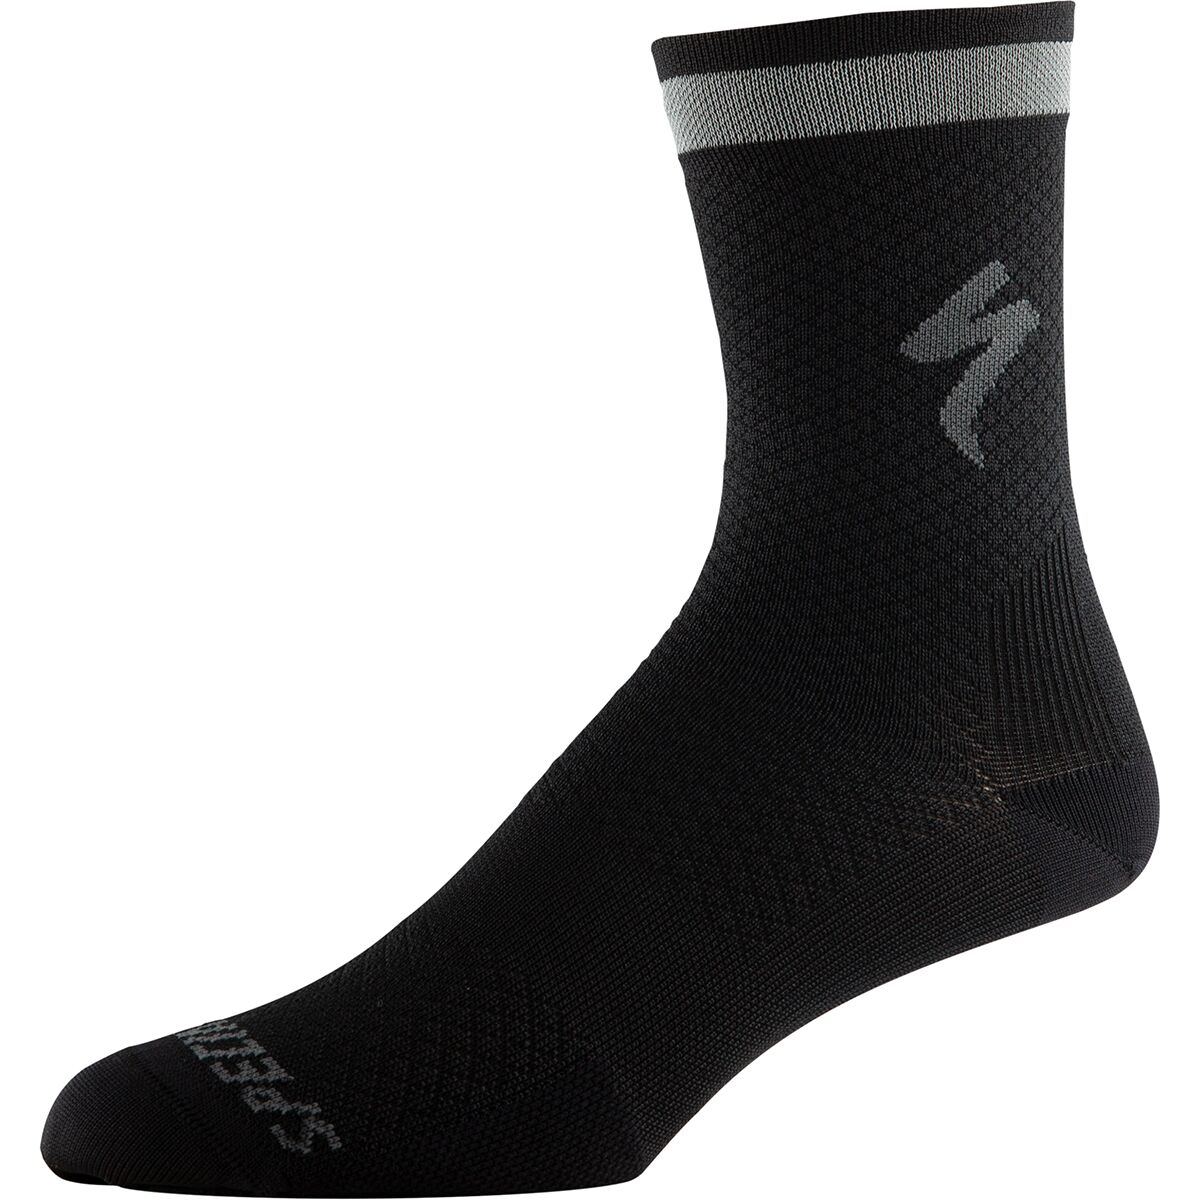 Specialized HyperViz Soft Air Reflective Tall Sock Black, M - Men's